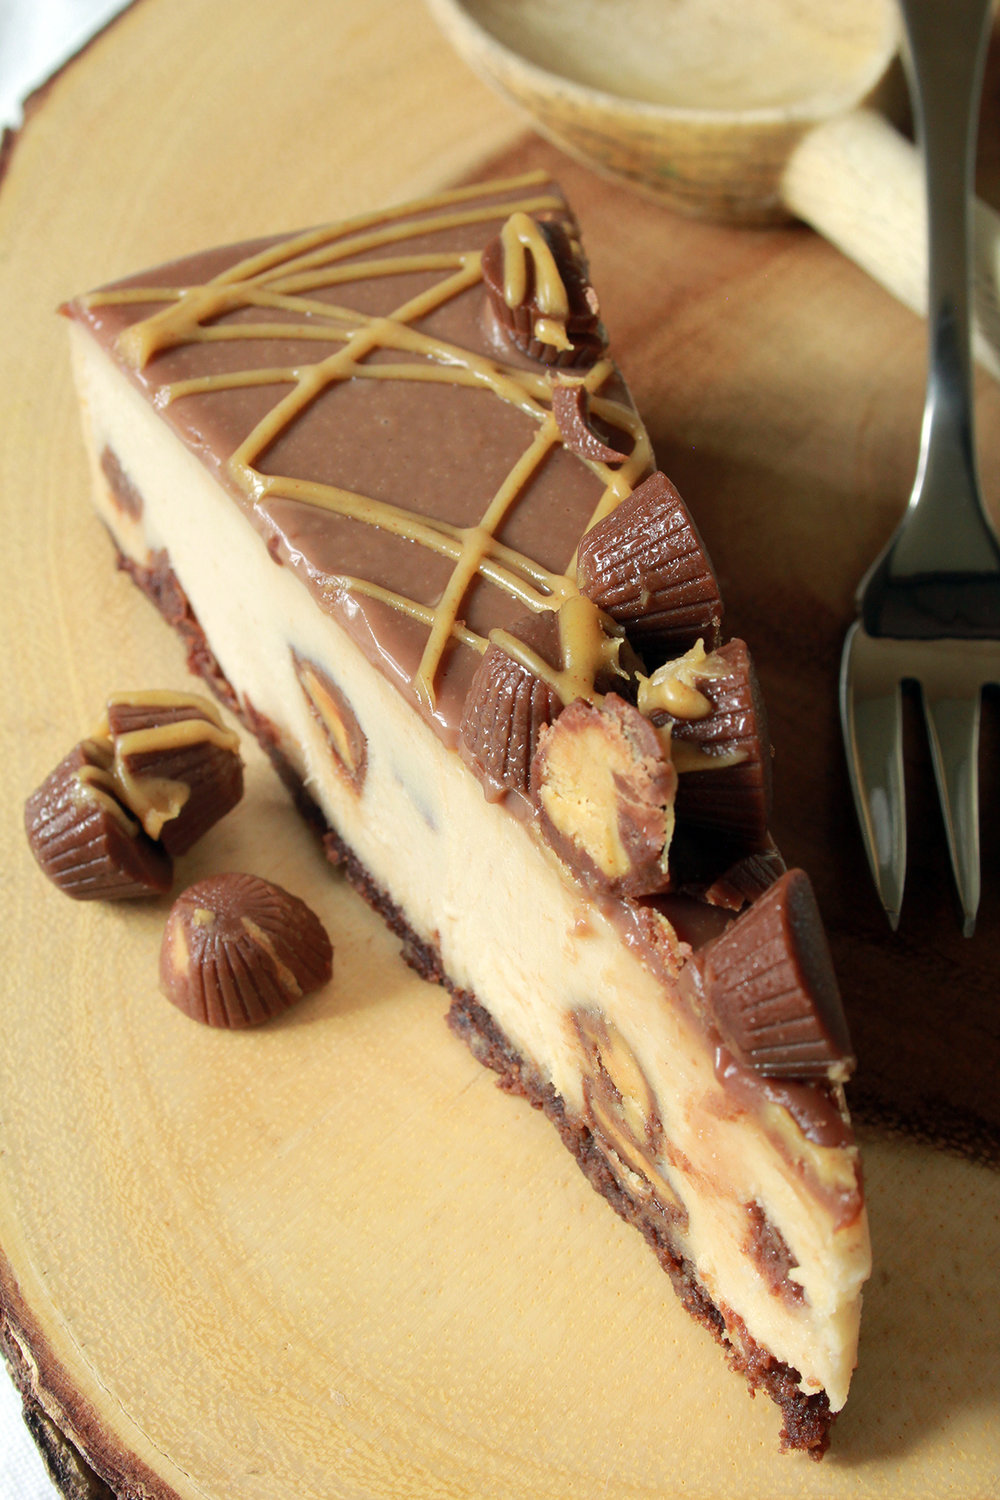 NEW!* REESE'S Peanut Butter Temptation — WOW! Factor Desserts